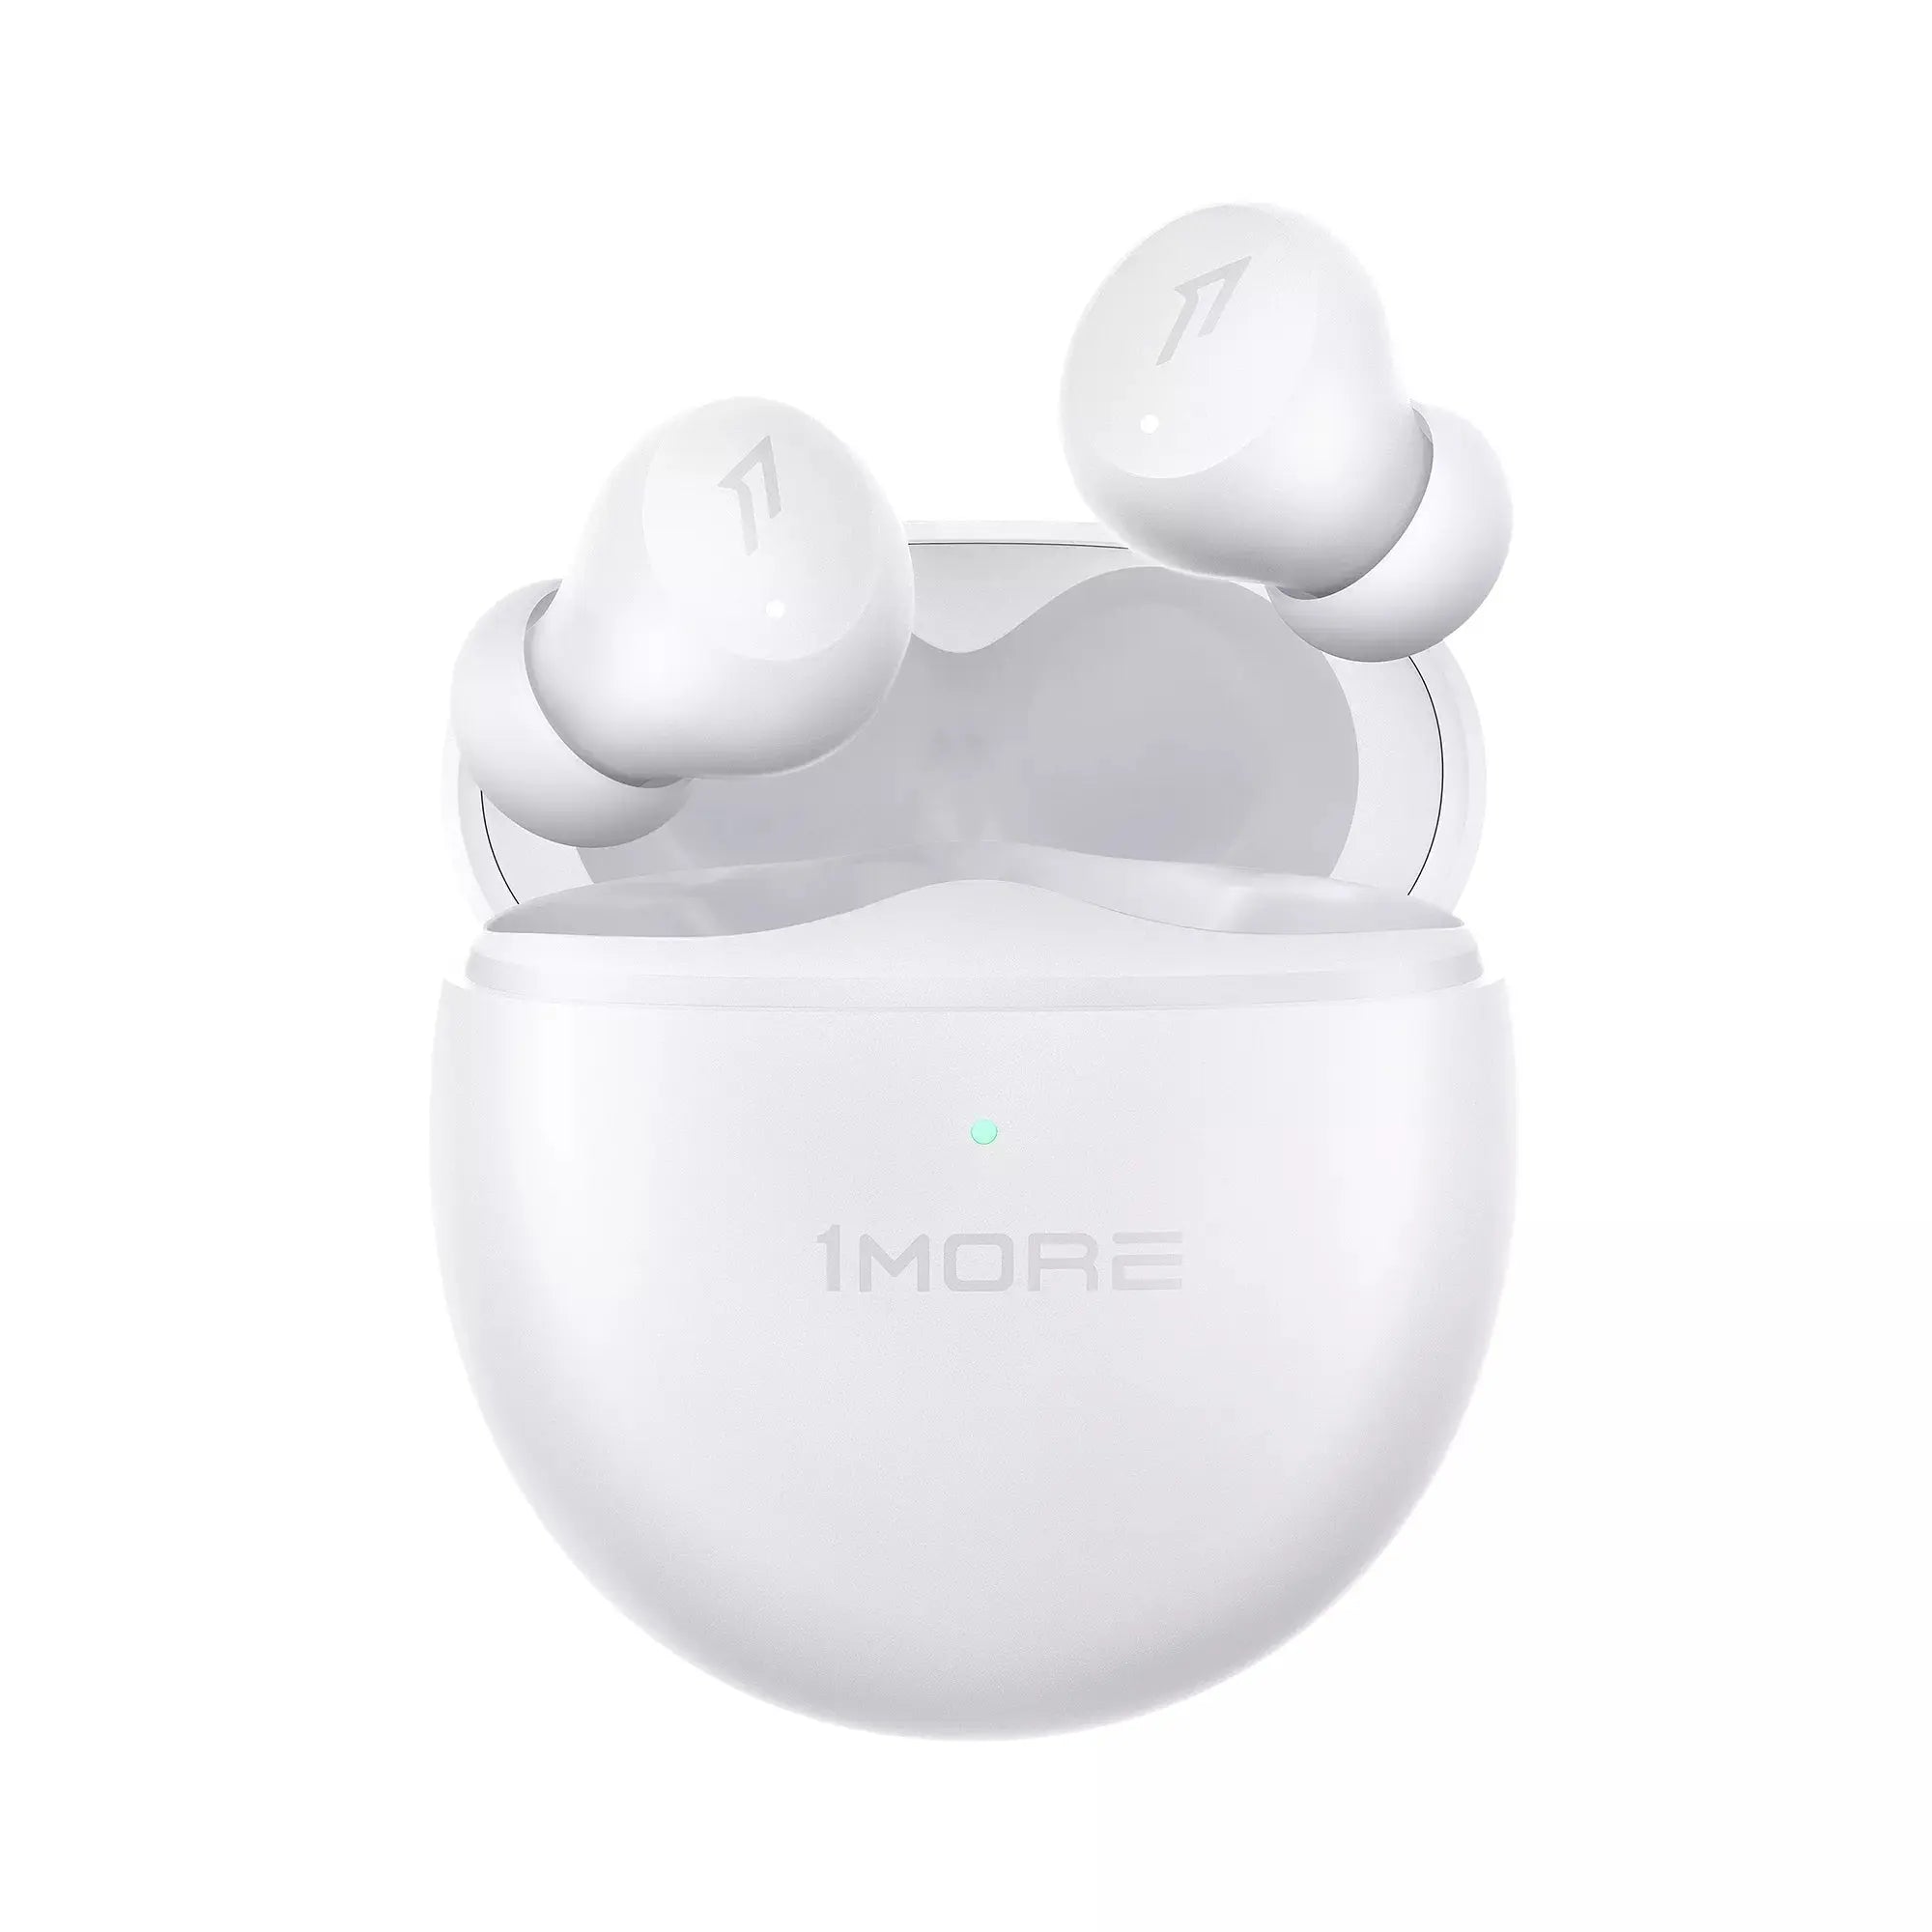 1MORE ComfoBuds Mini True Wireless Noise Canceling Headphones